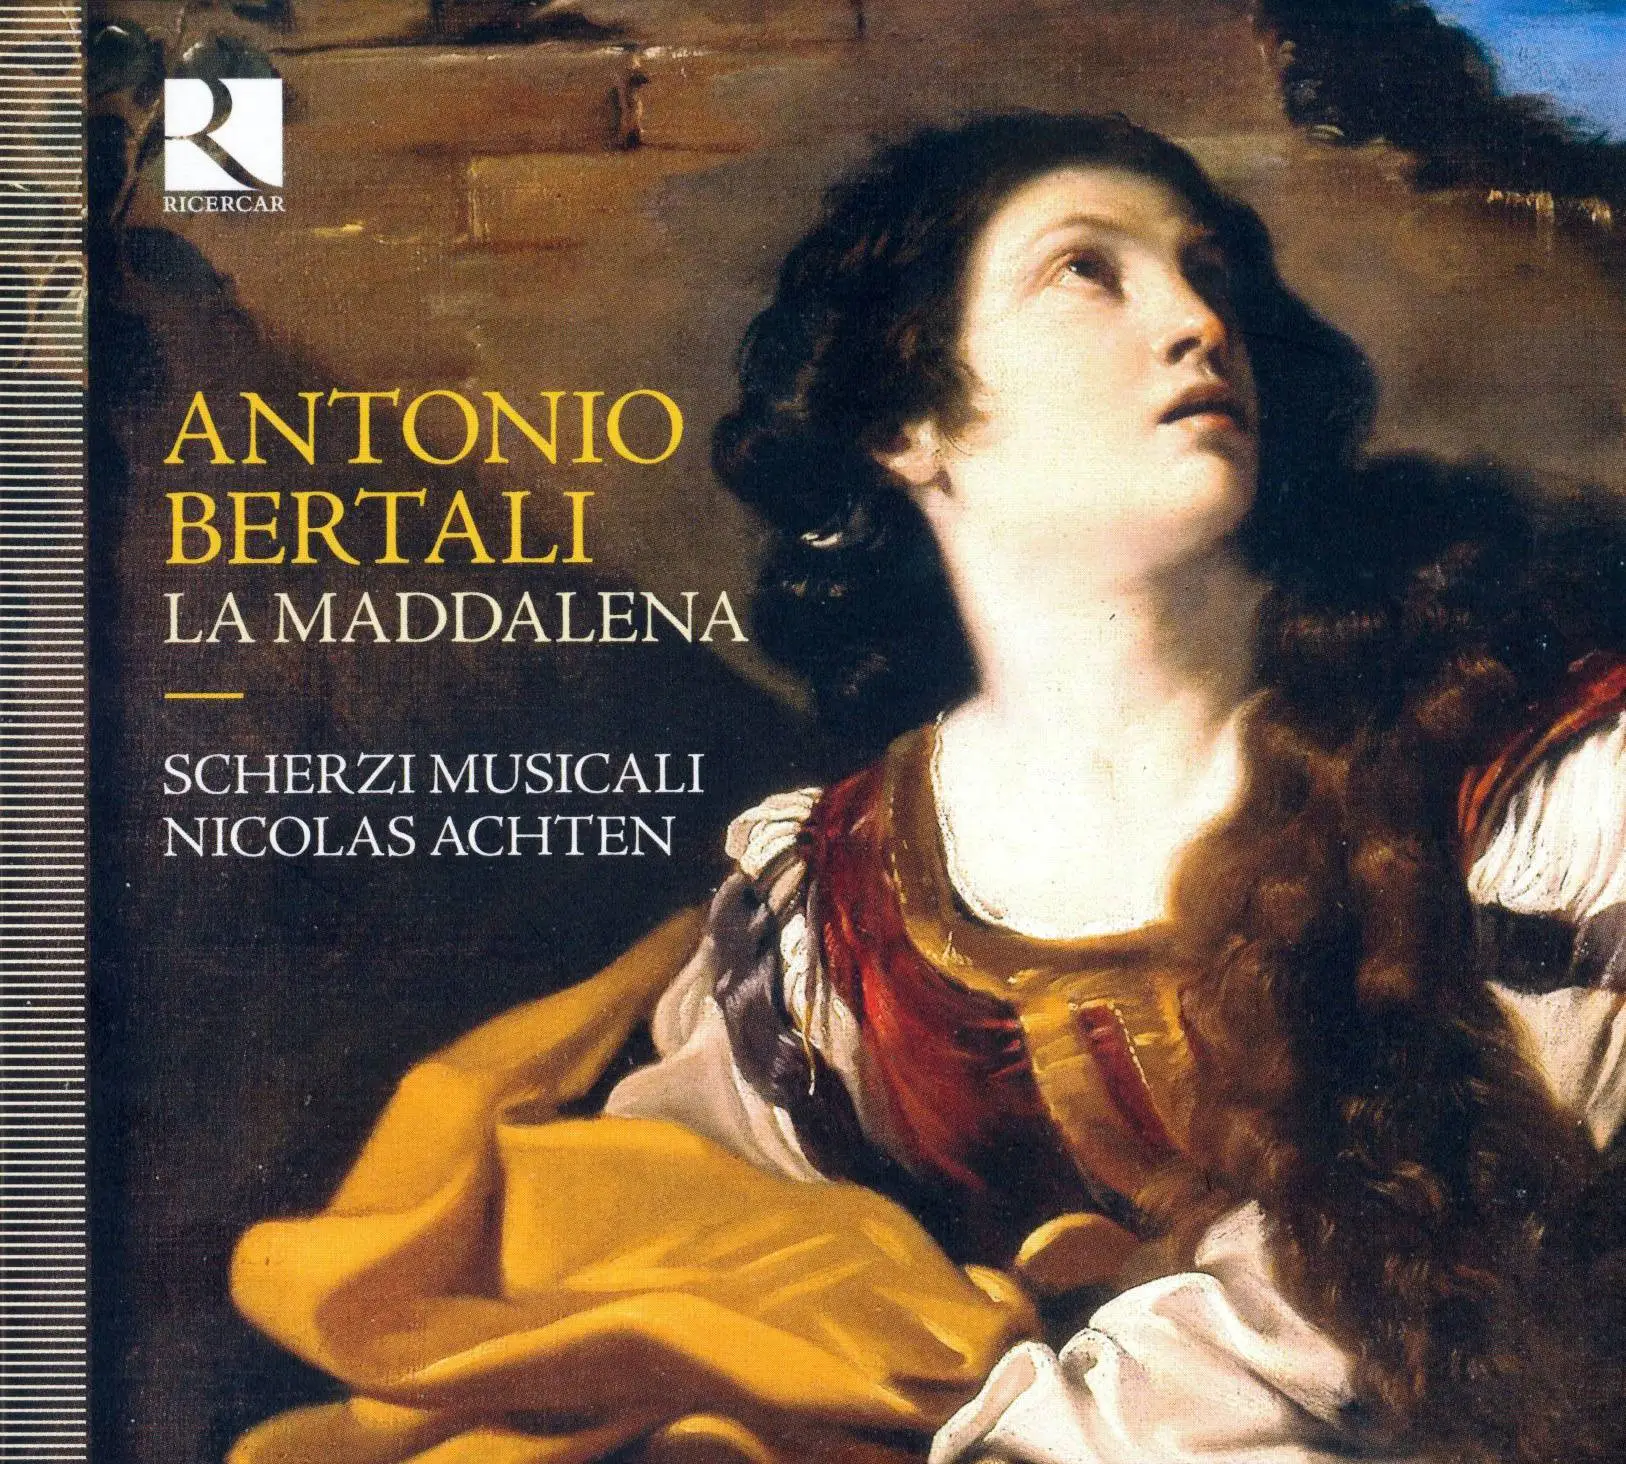 Scherzi Musicali, Nicolas Achten - Antonio Bertali: La Maddalena (2016 ...